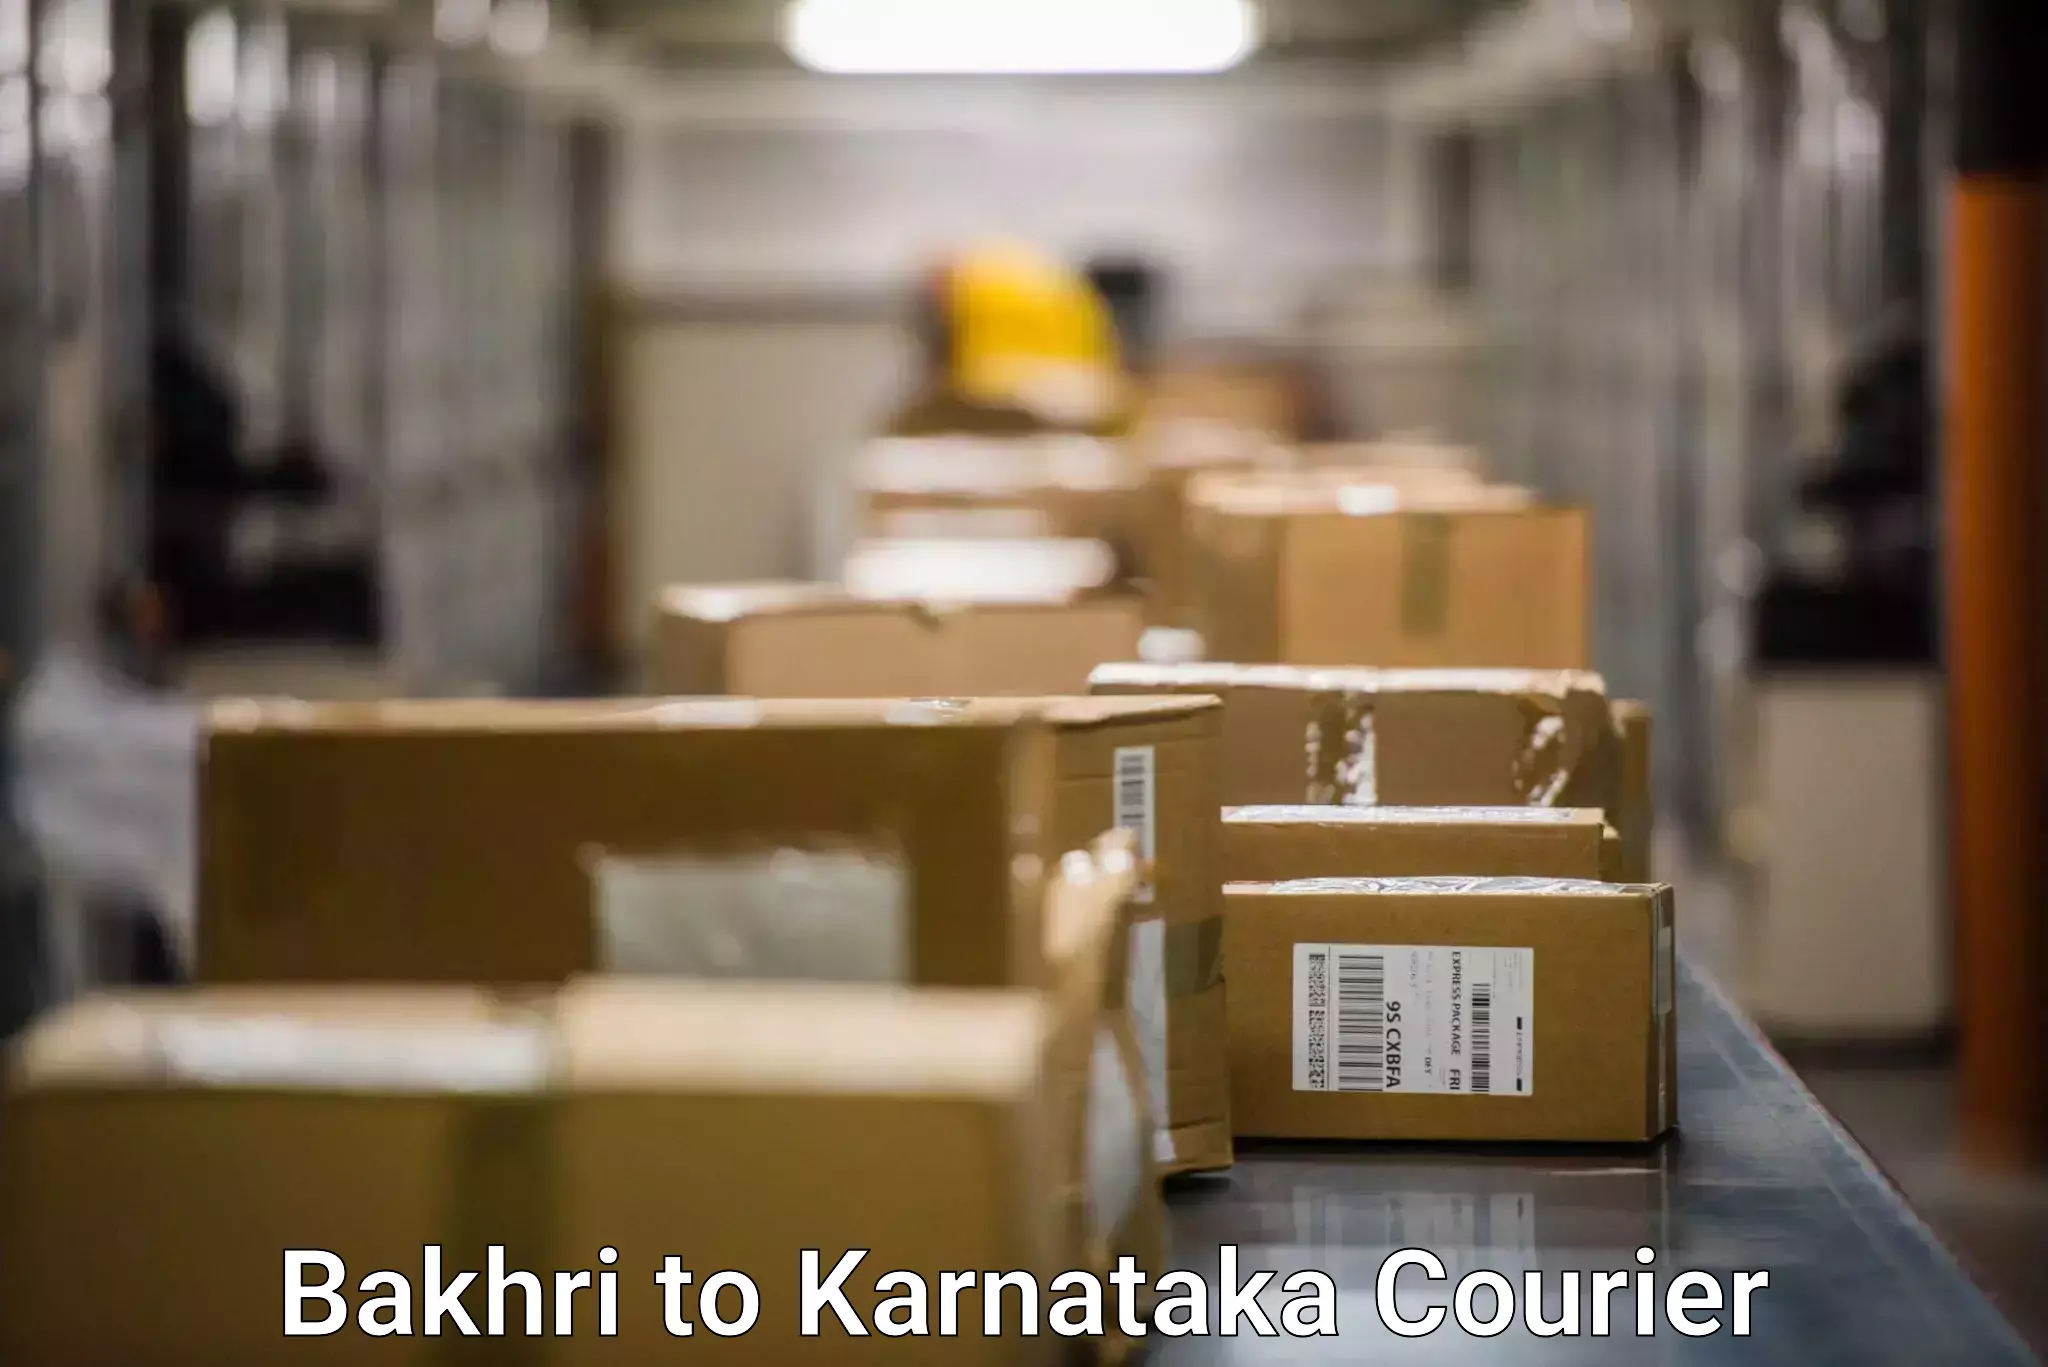 Efficient order fulfillment Bakhri to Karnataka